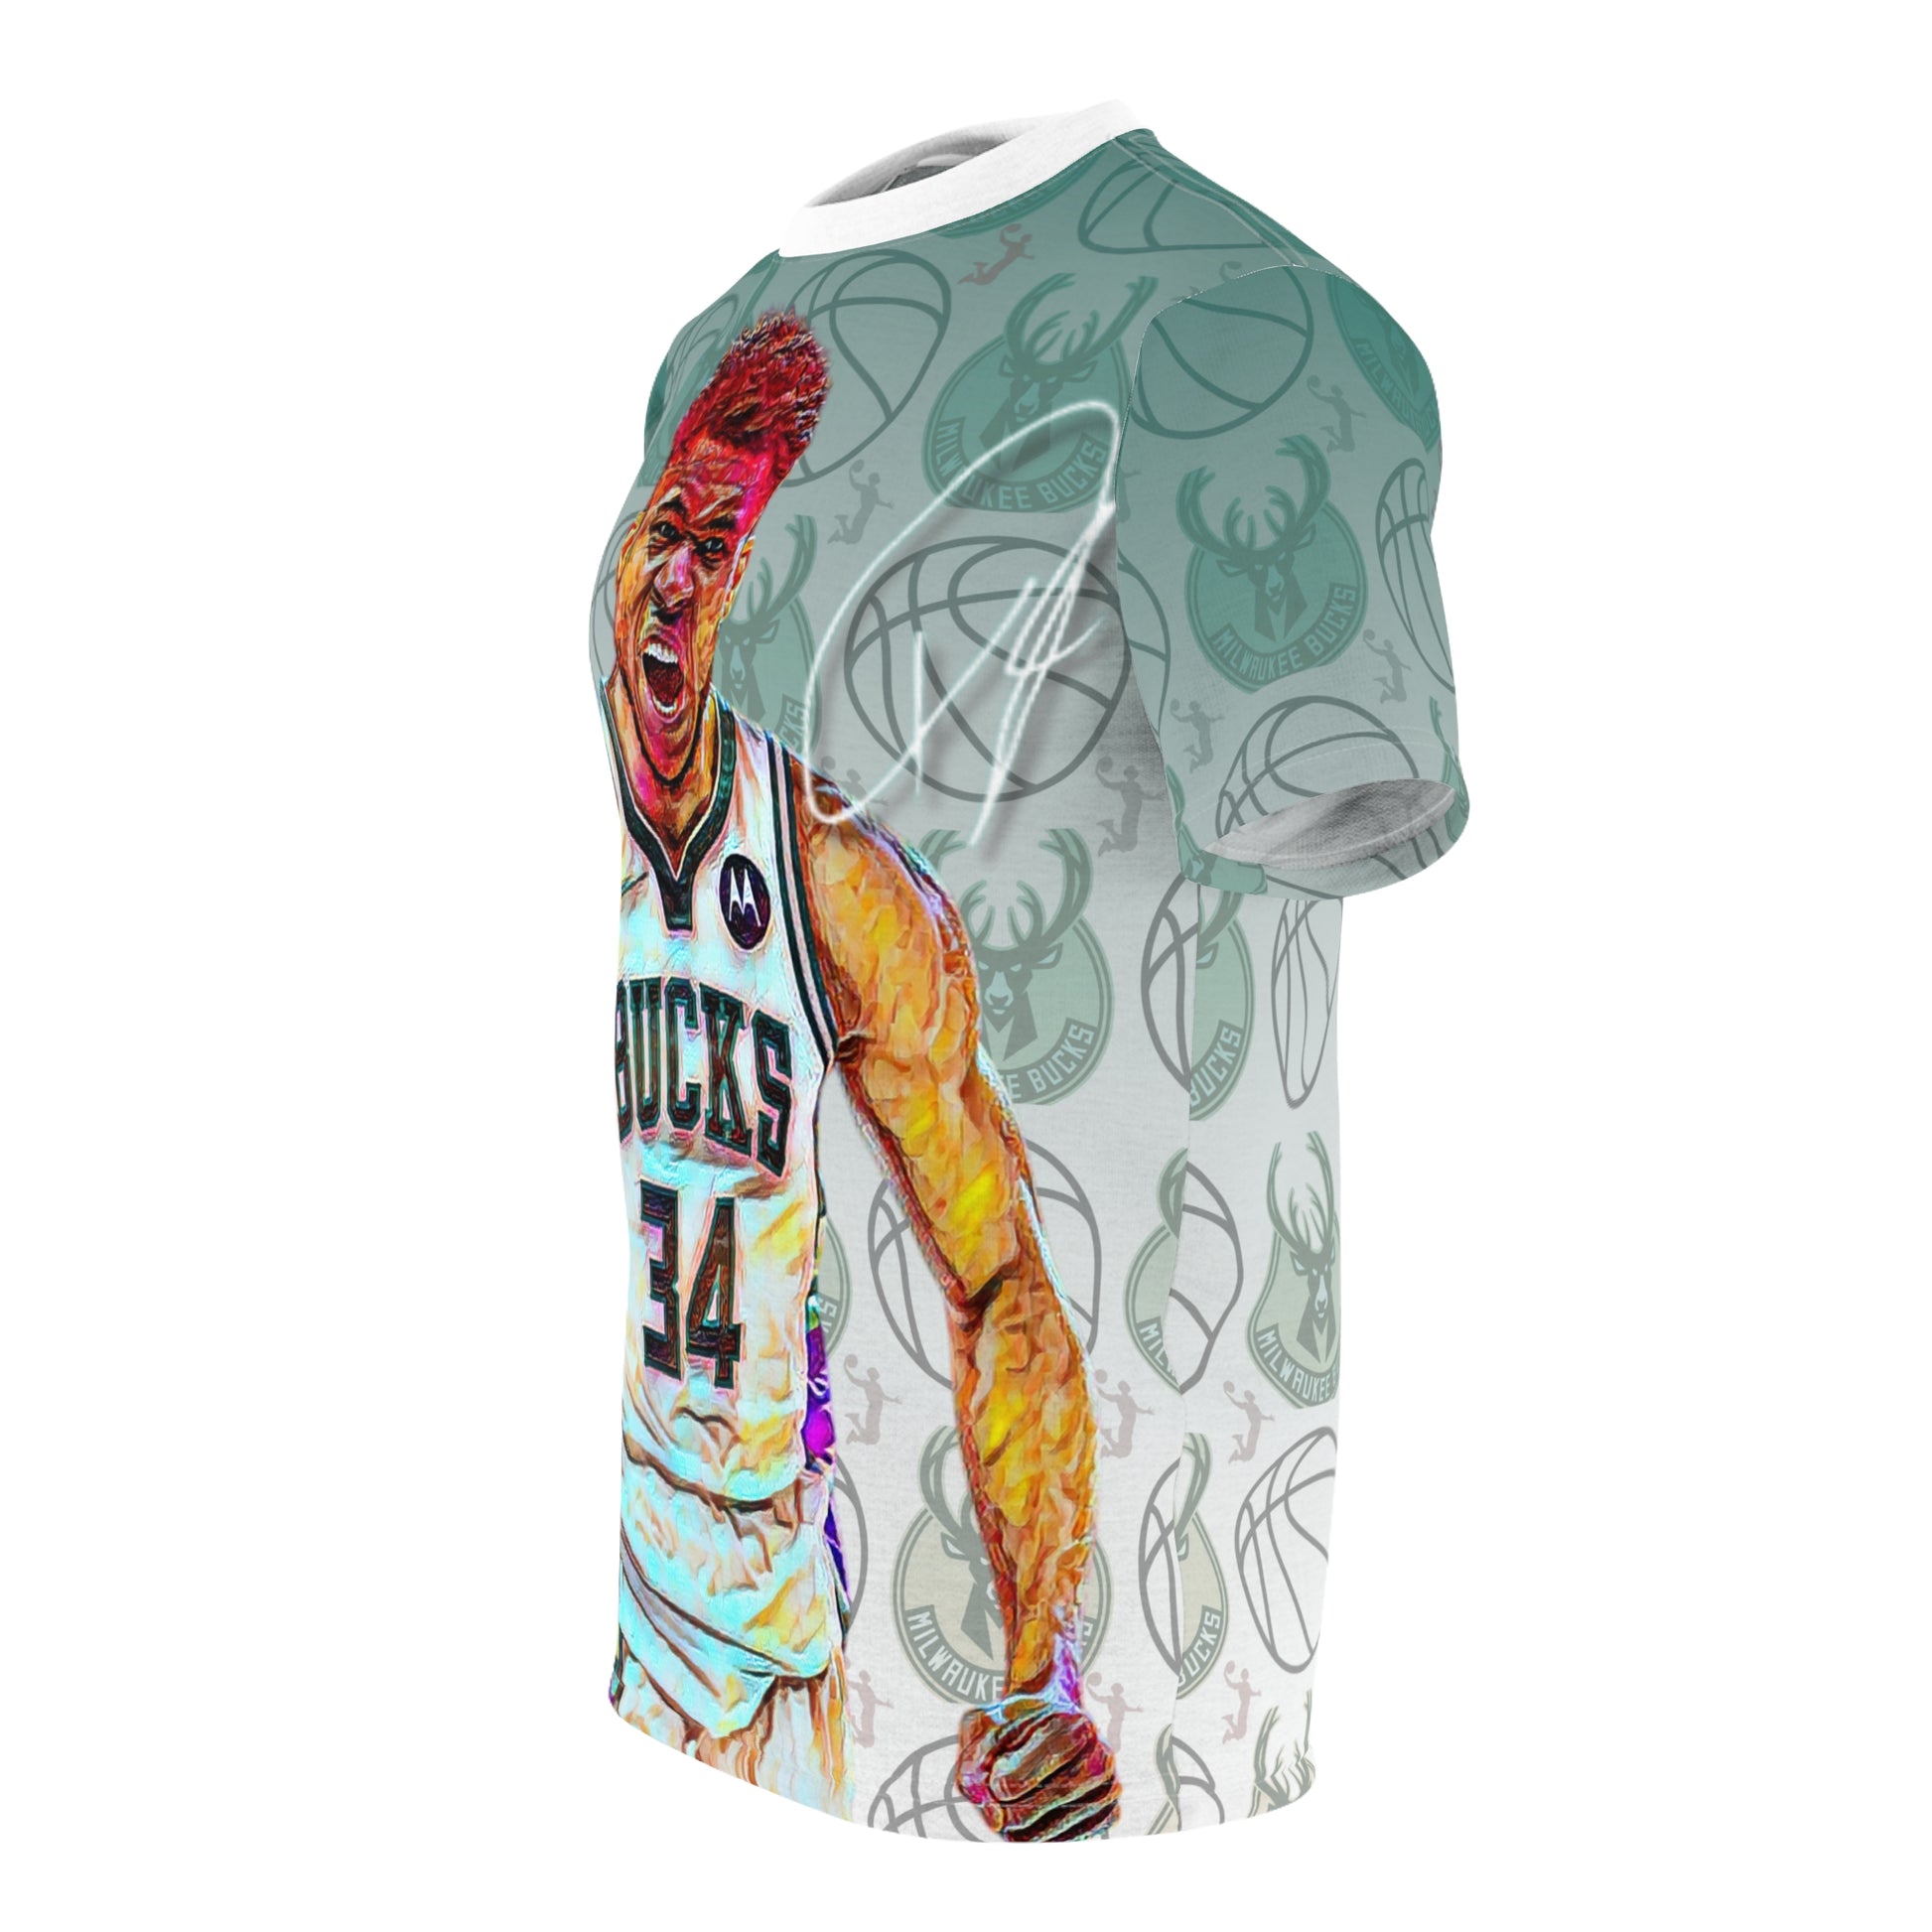 NBA All-Star Giannis Antetokounmpo AOP Graphic Streetwear Tee left